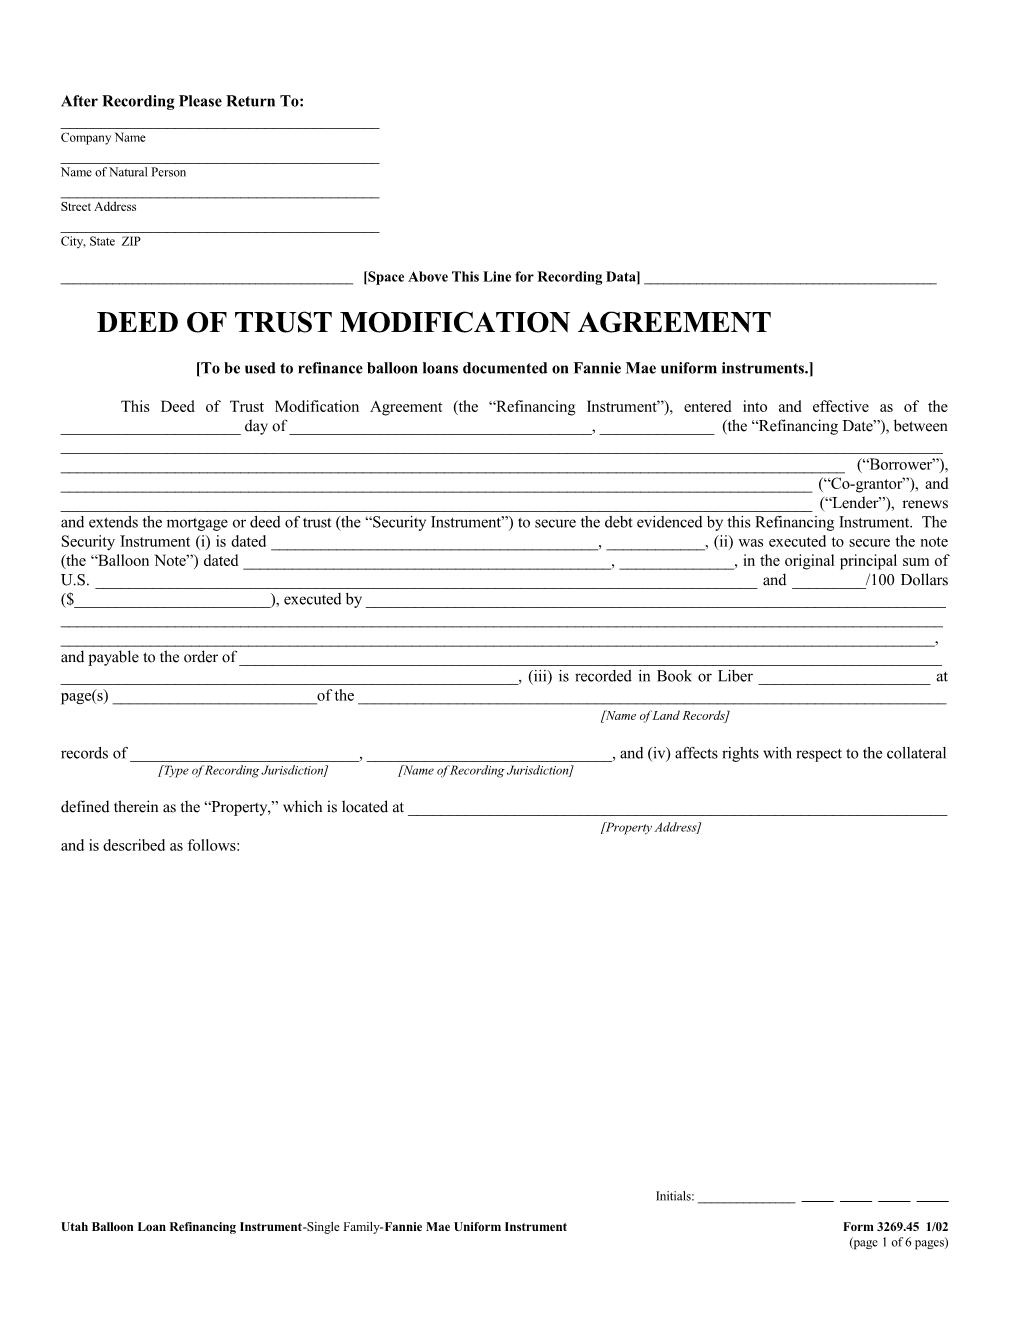 Utah Balloon Loan Refinancing Instrument (Form 3269.45): Word